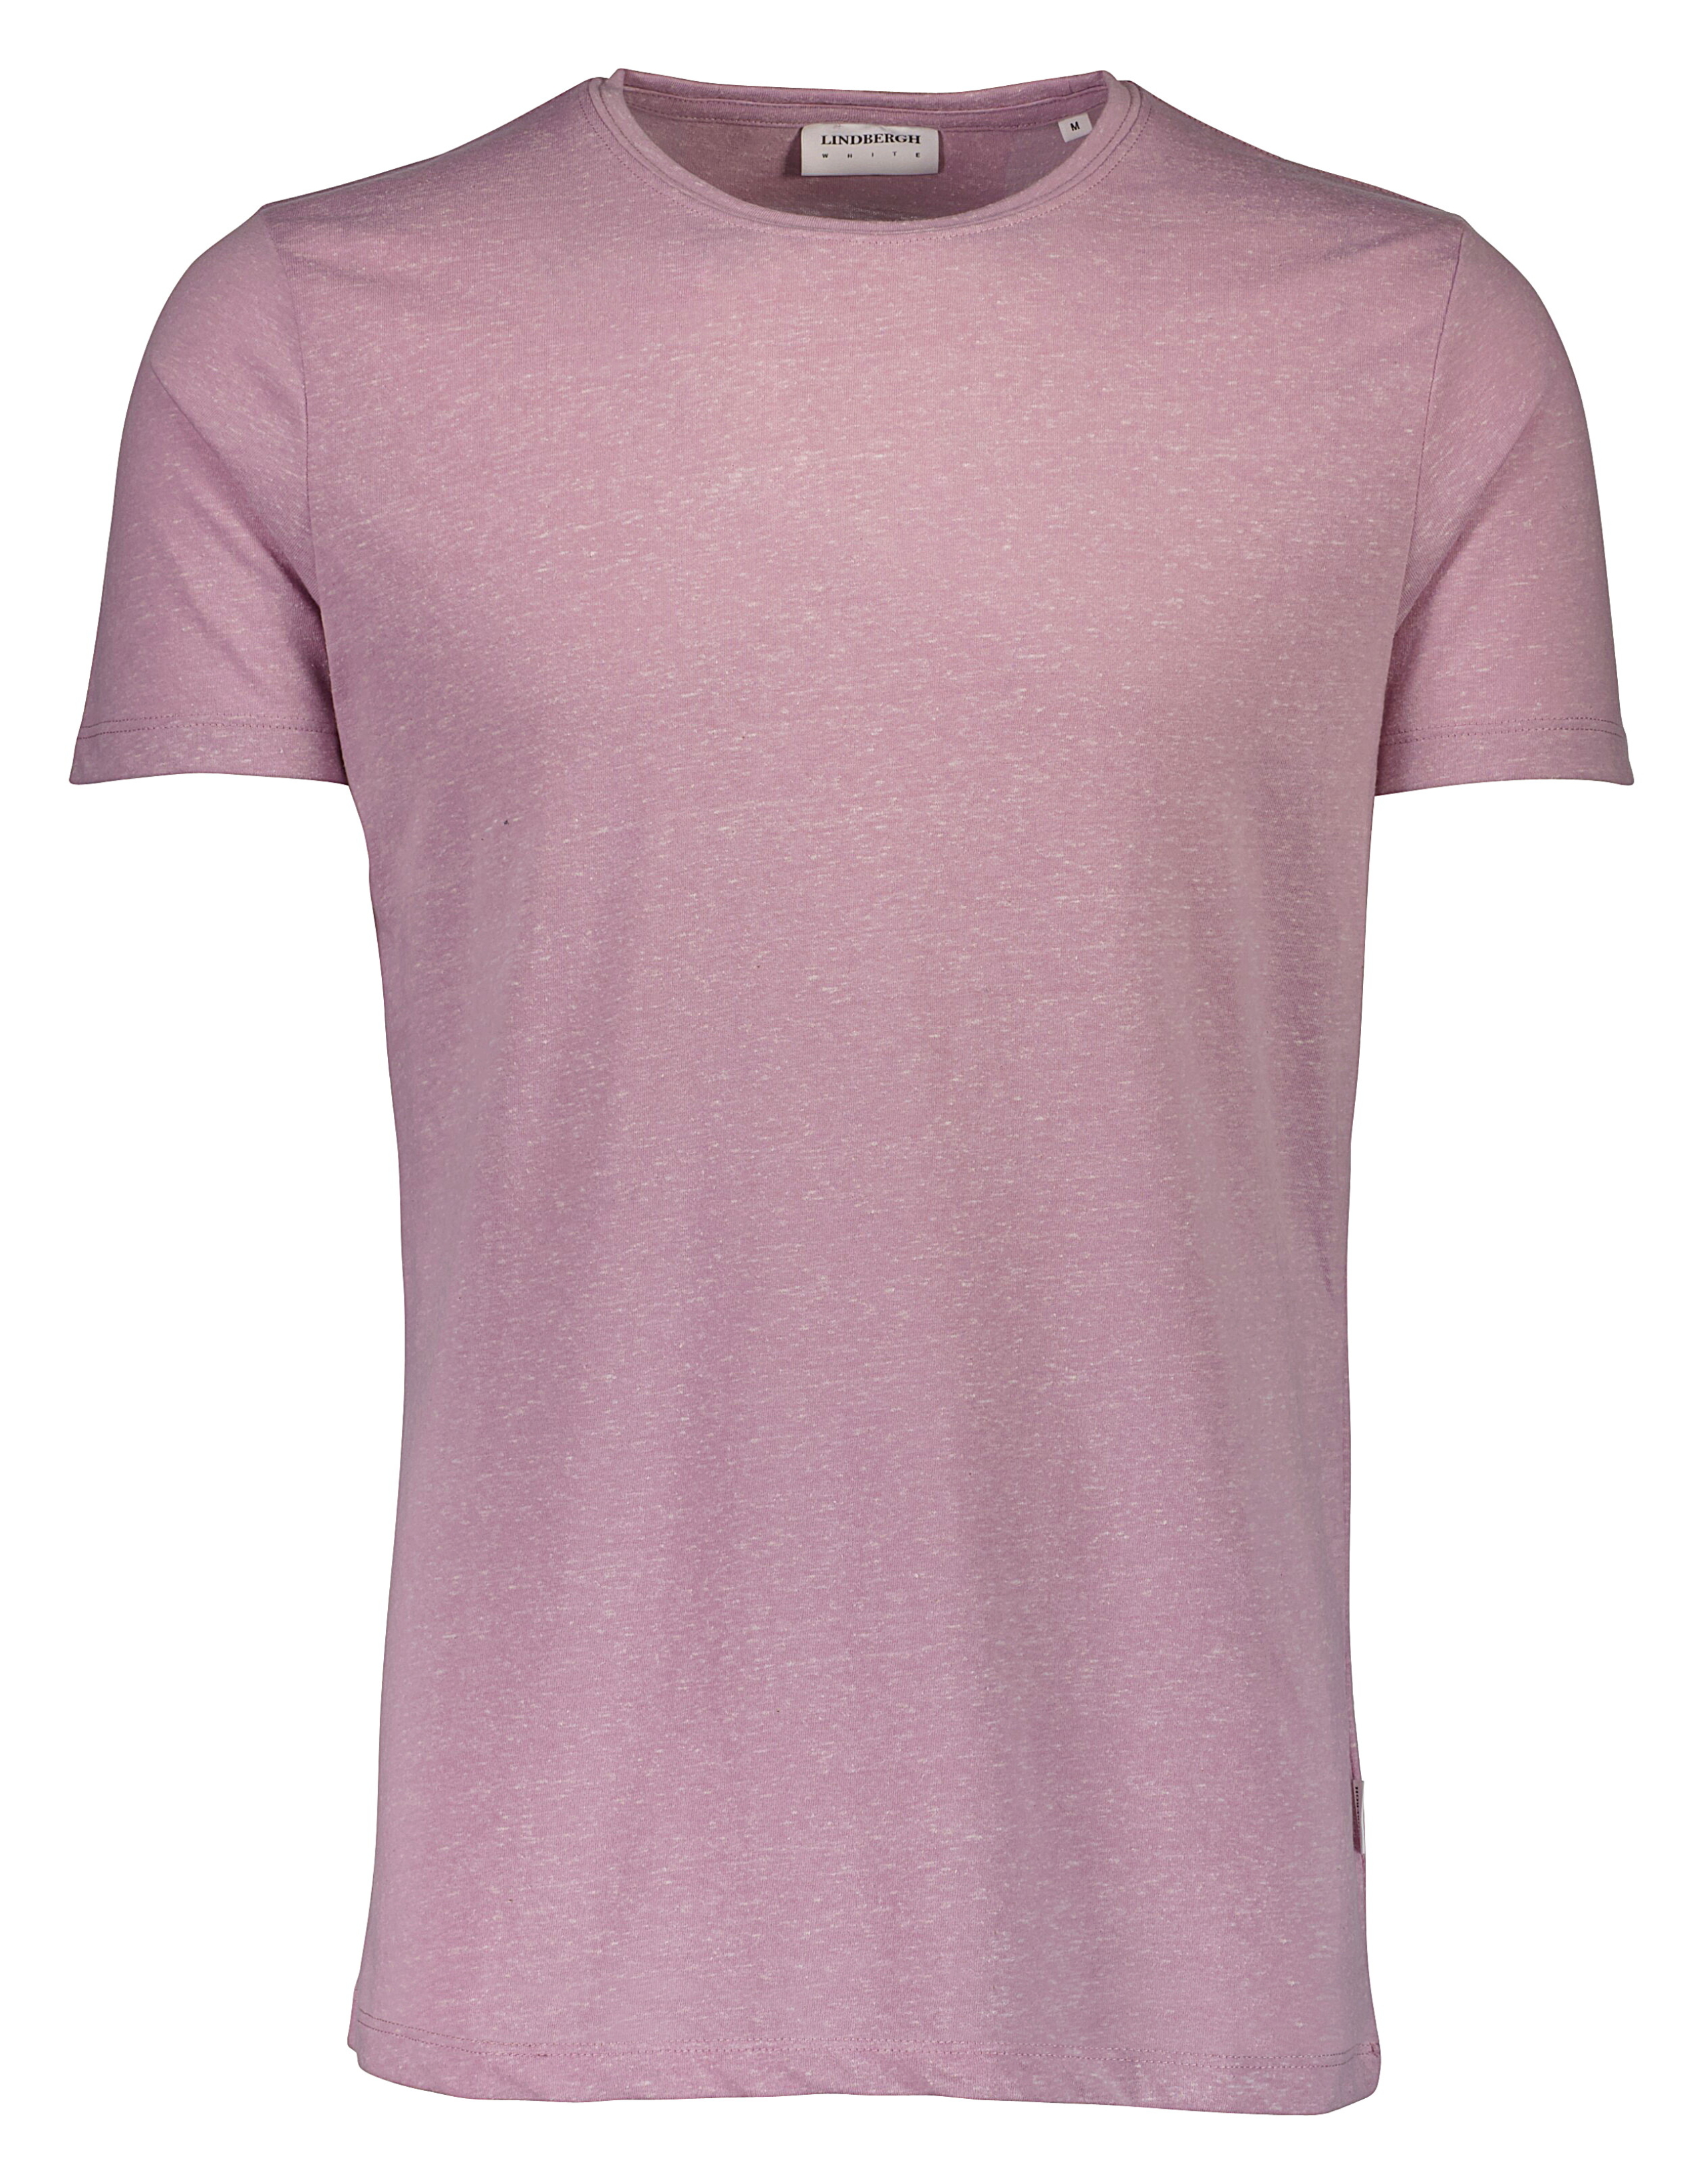 Lindbergh T-shirt lilla / lt purple